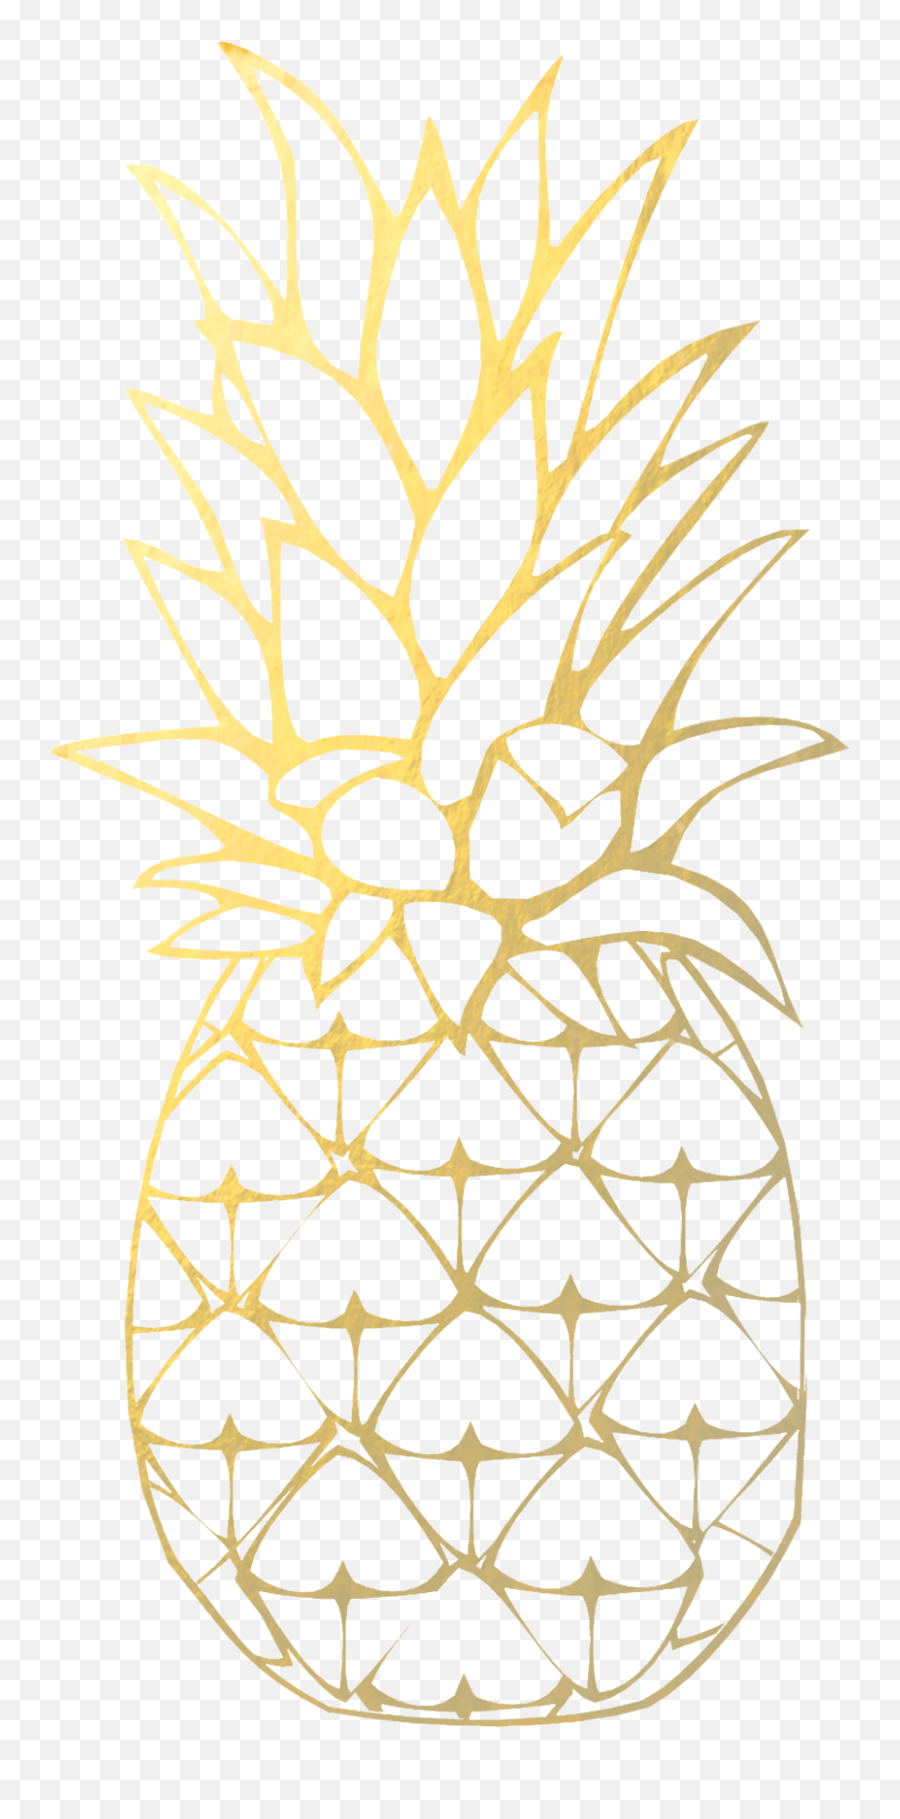 Download Gold Pineapple Png Image - Transparent Gold Pineapple Png,Pineapple Transparent Background